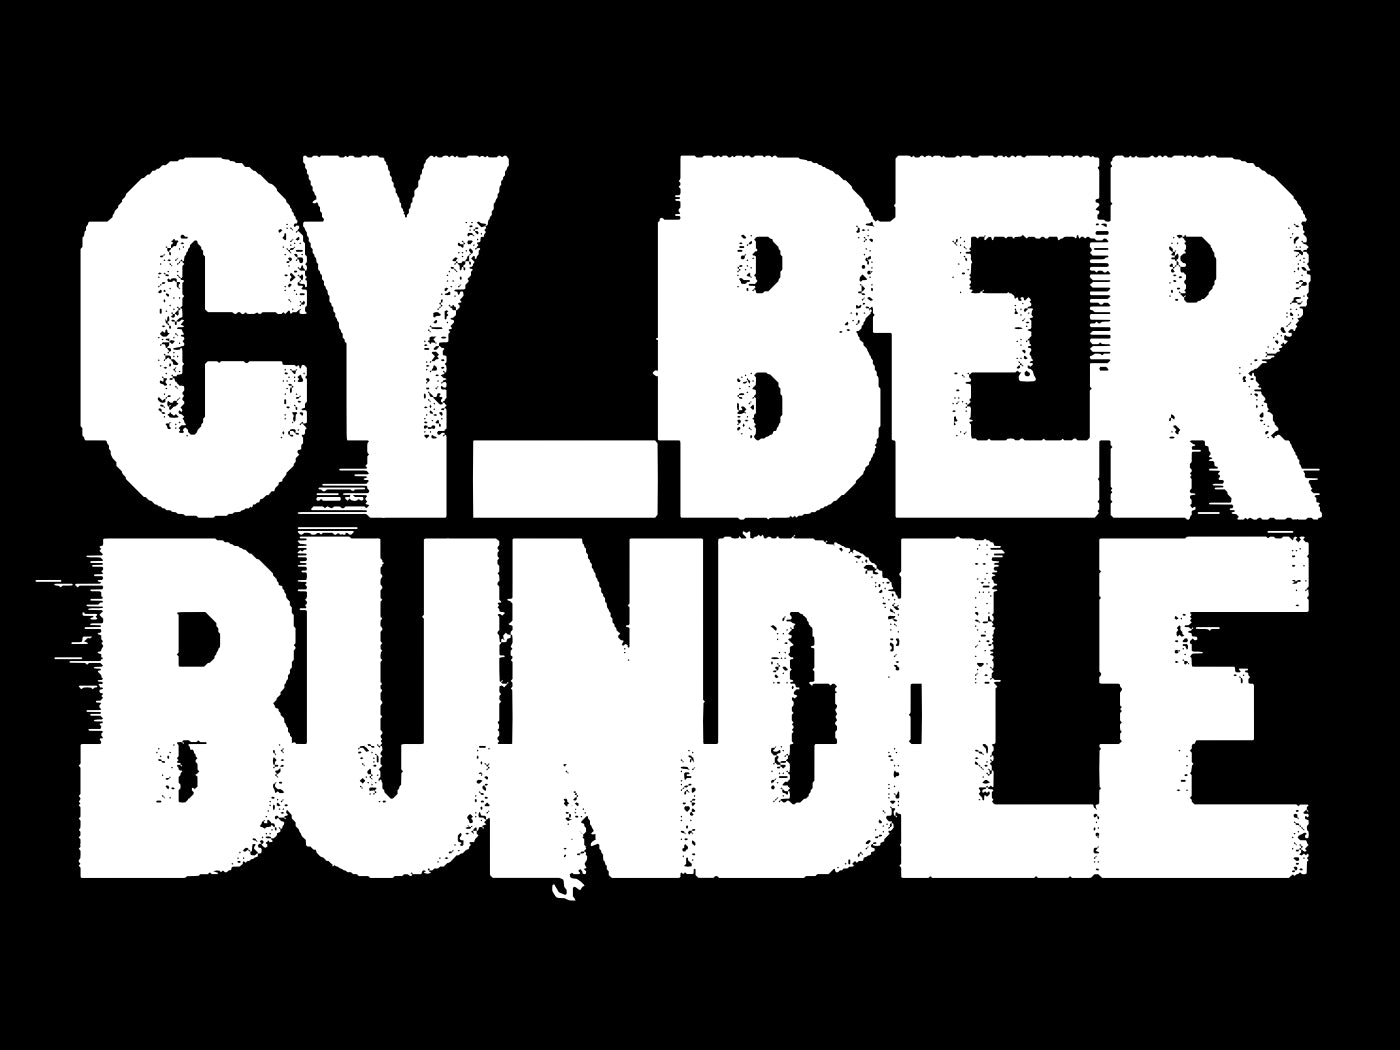 CY_BER Bundle